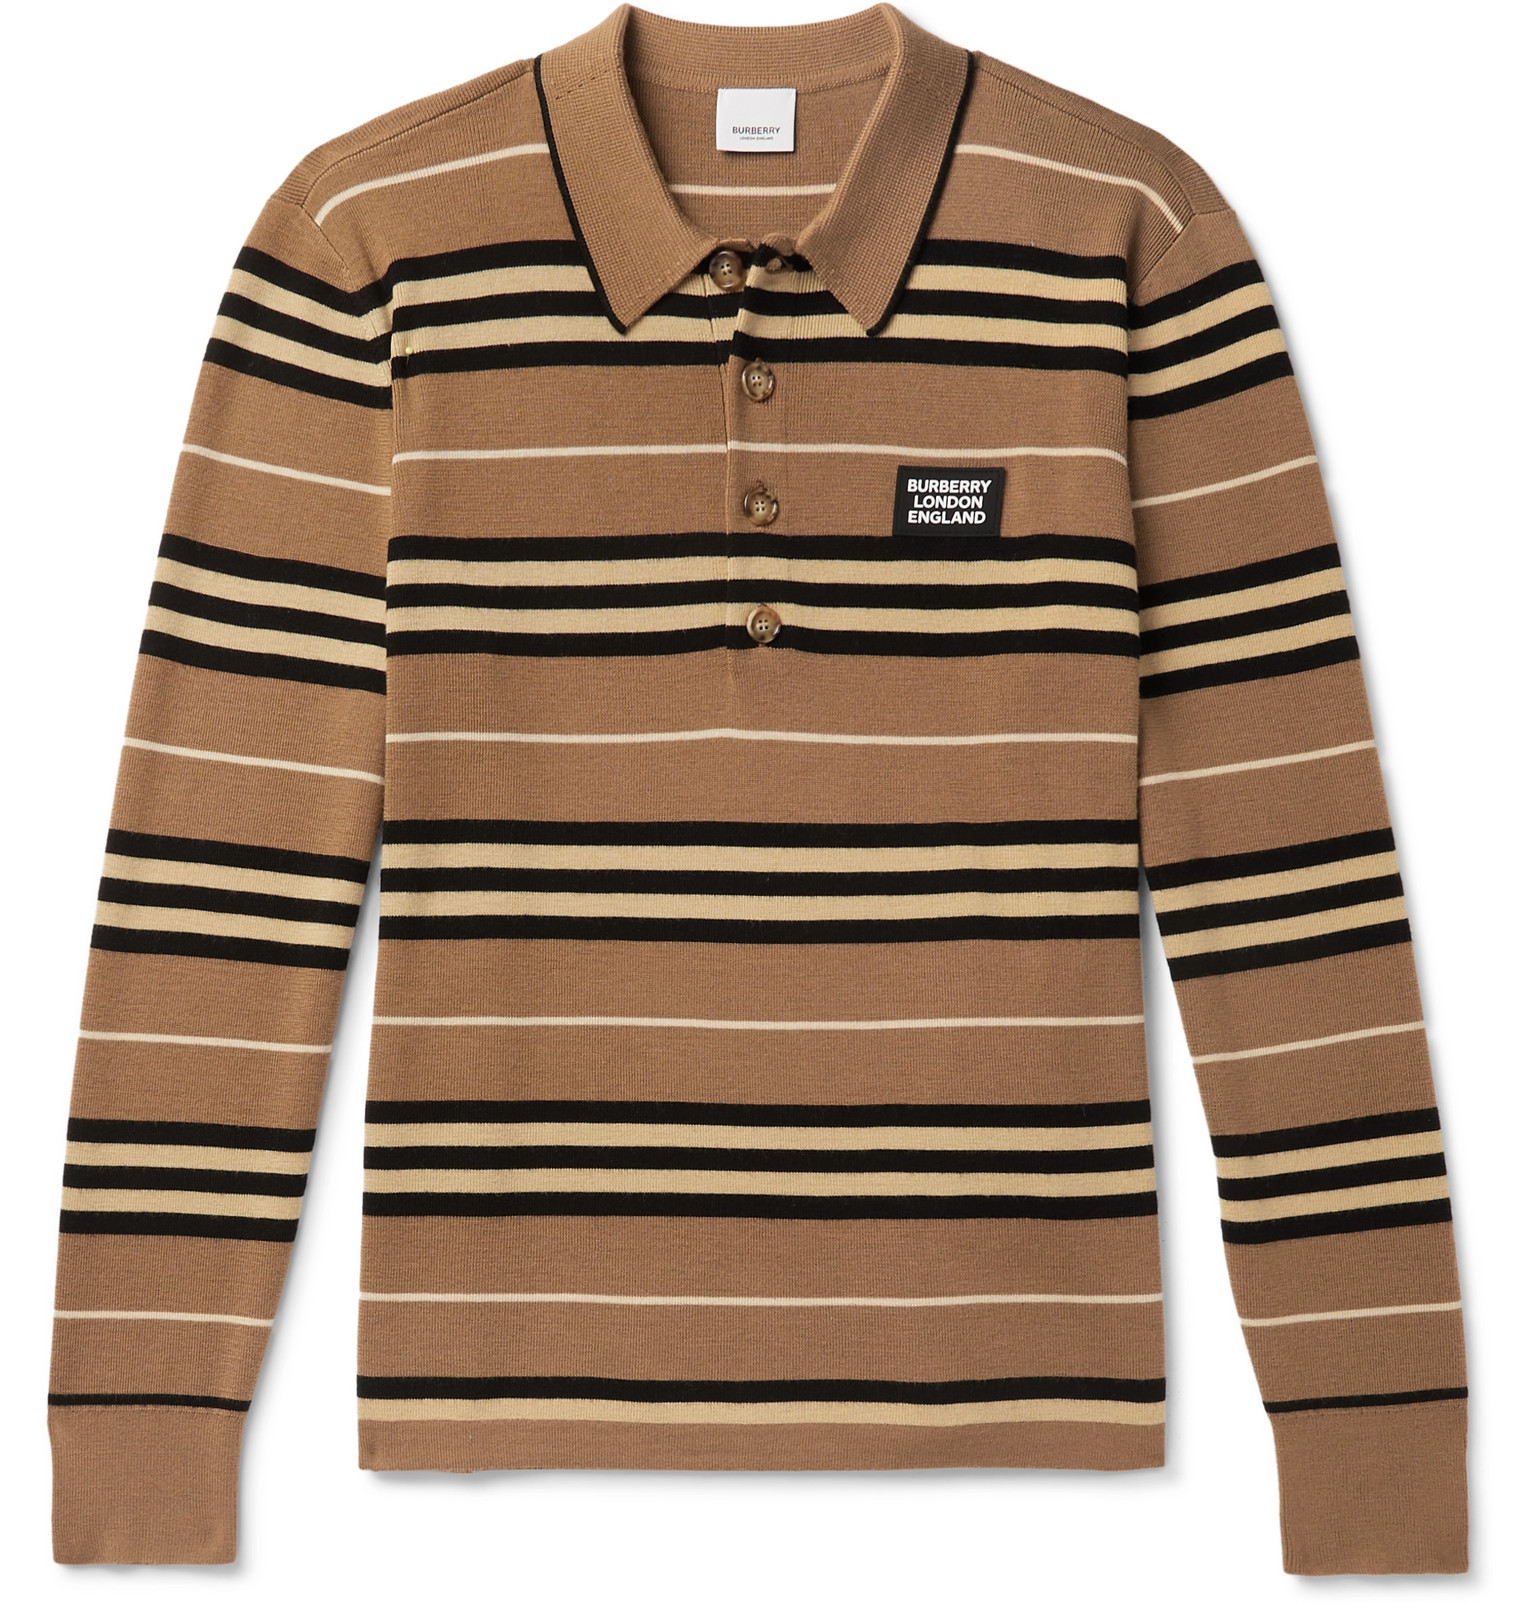 burberry striped shirt